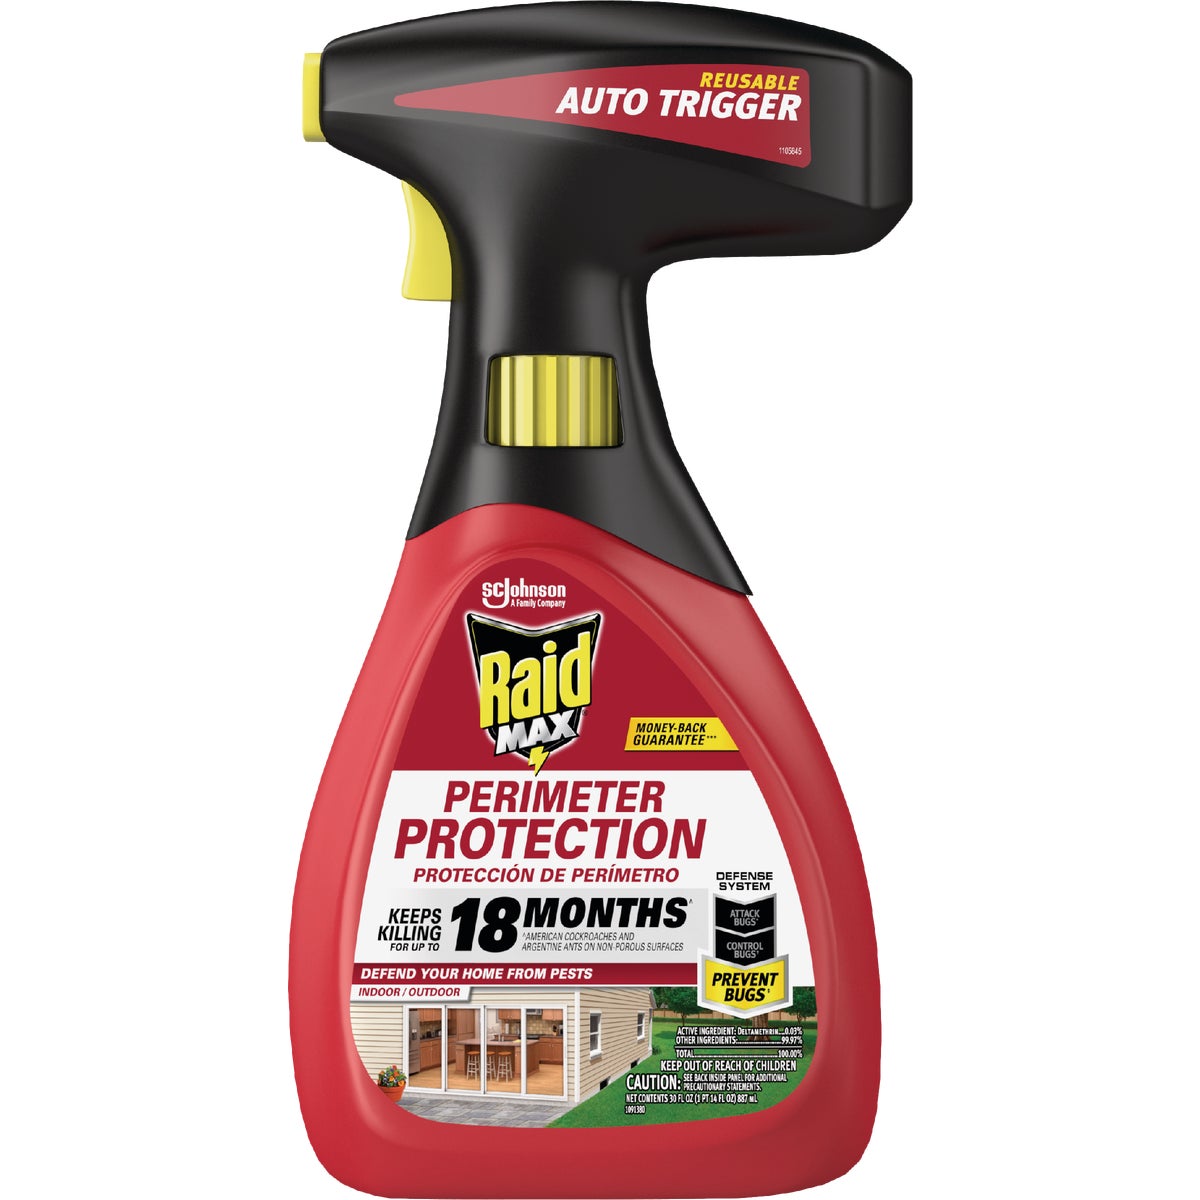 Raid Max Perimeter Protection 30 Oz. Ready To Use Trigger Spray Insect Killer